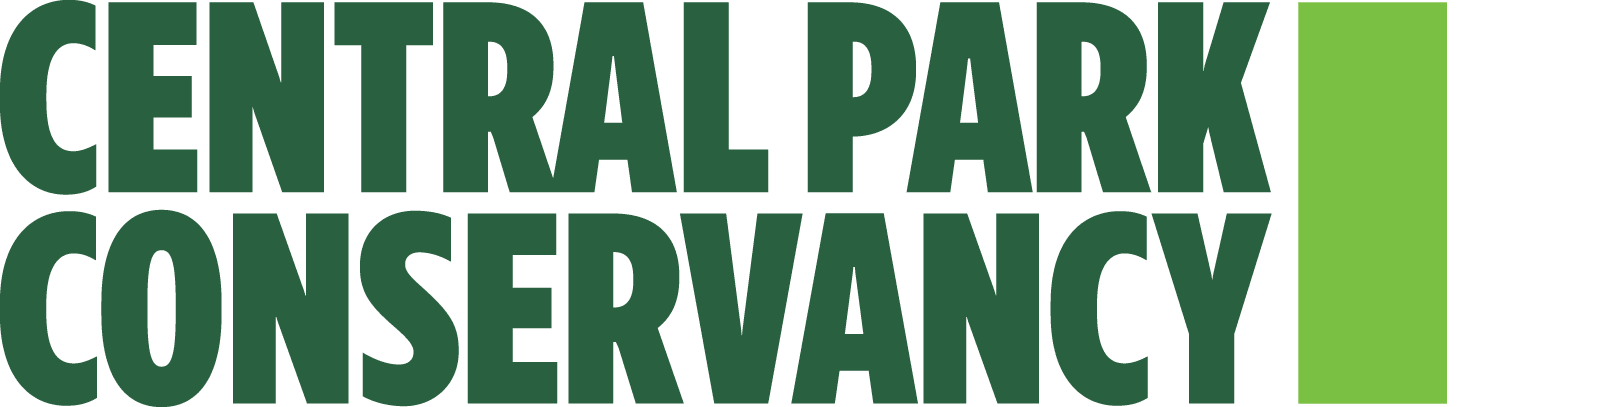 Logo for Central Park Conservancy